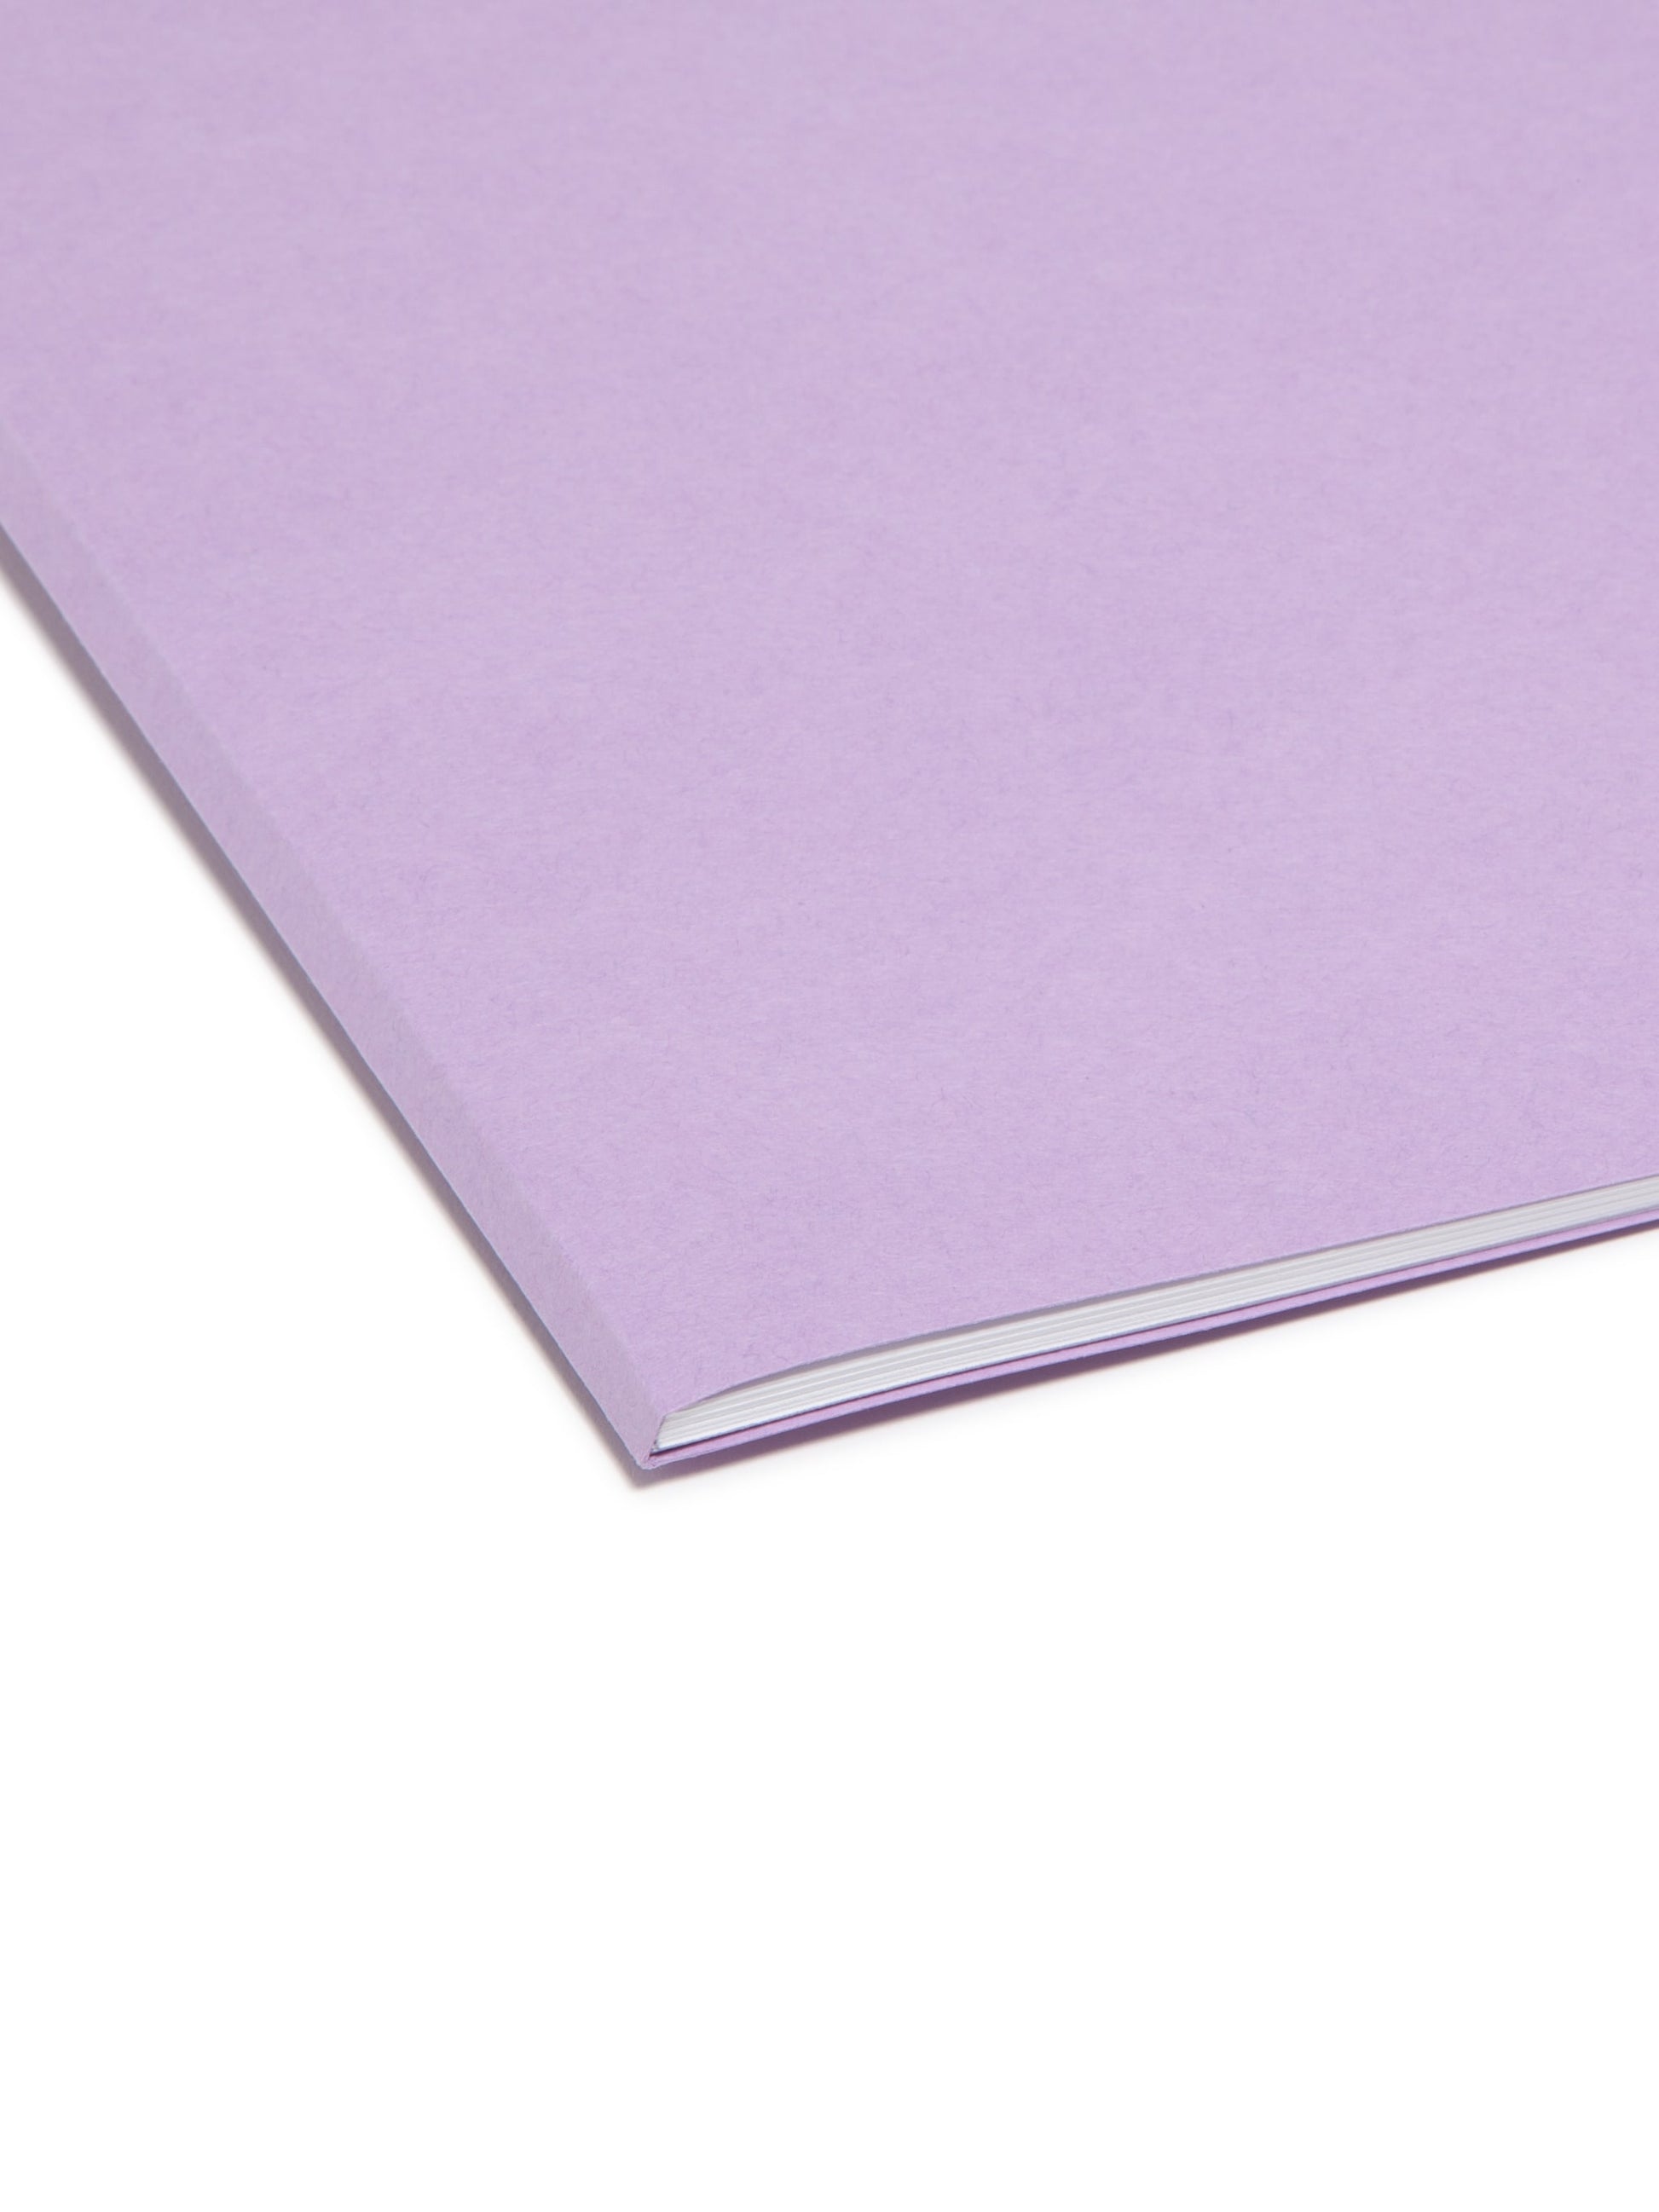 Reinforced Tab File Folders, Straight-Cut Tab, Lavender Color, Legal Size, Set of 100, 086486174107